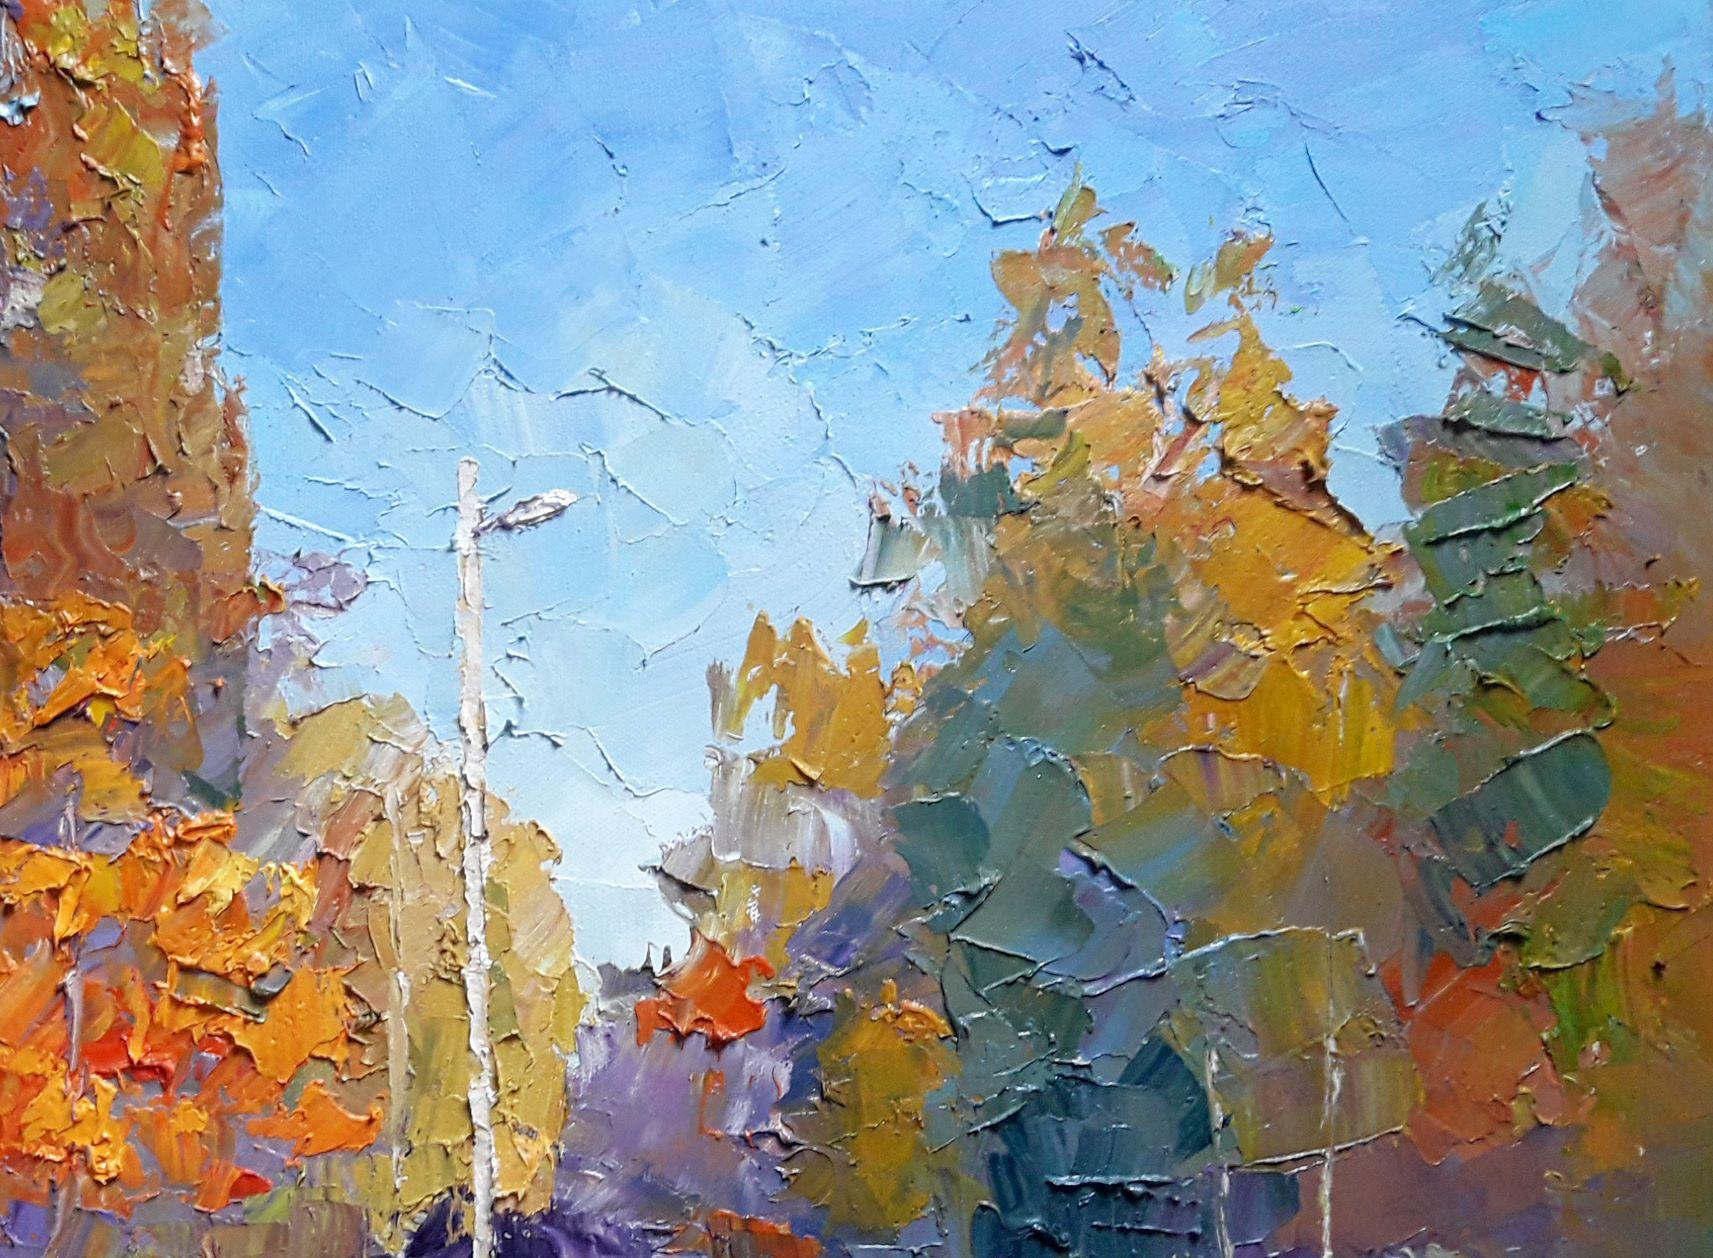 Artist: Boris Serdyuk 
Work: Original oil painting, handmade artwork, one of a kind 
Medium: Oil on Canvas
Style: Impressionism
Year: 2020
Title: Autumn Day
Size: 19.5